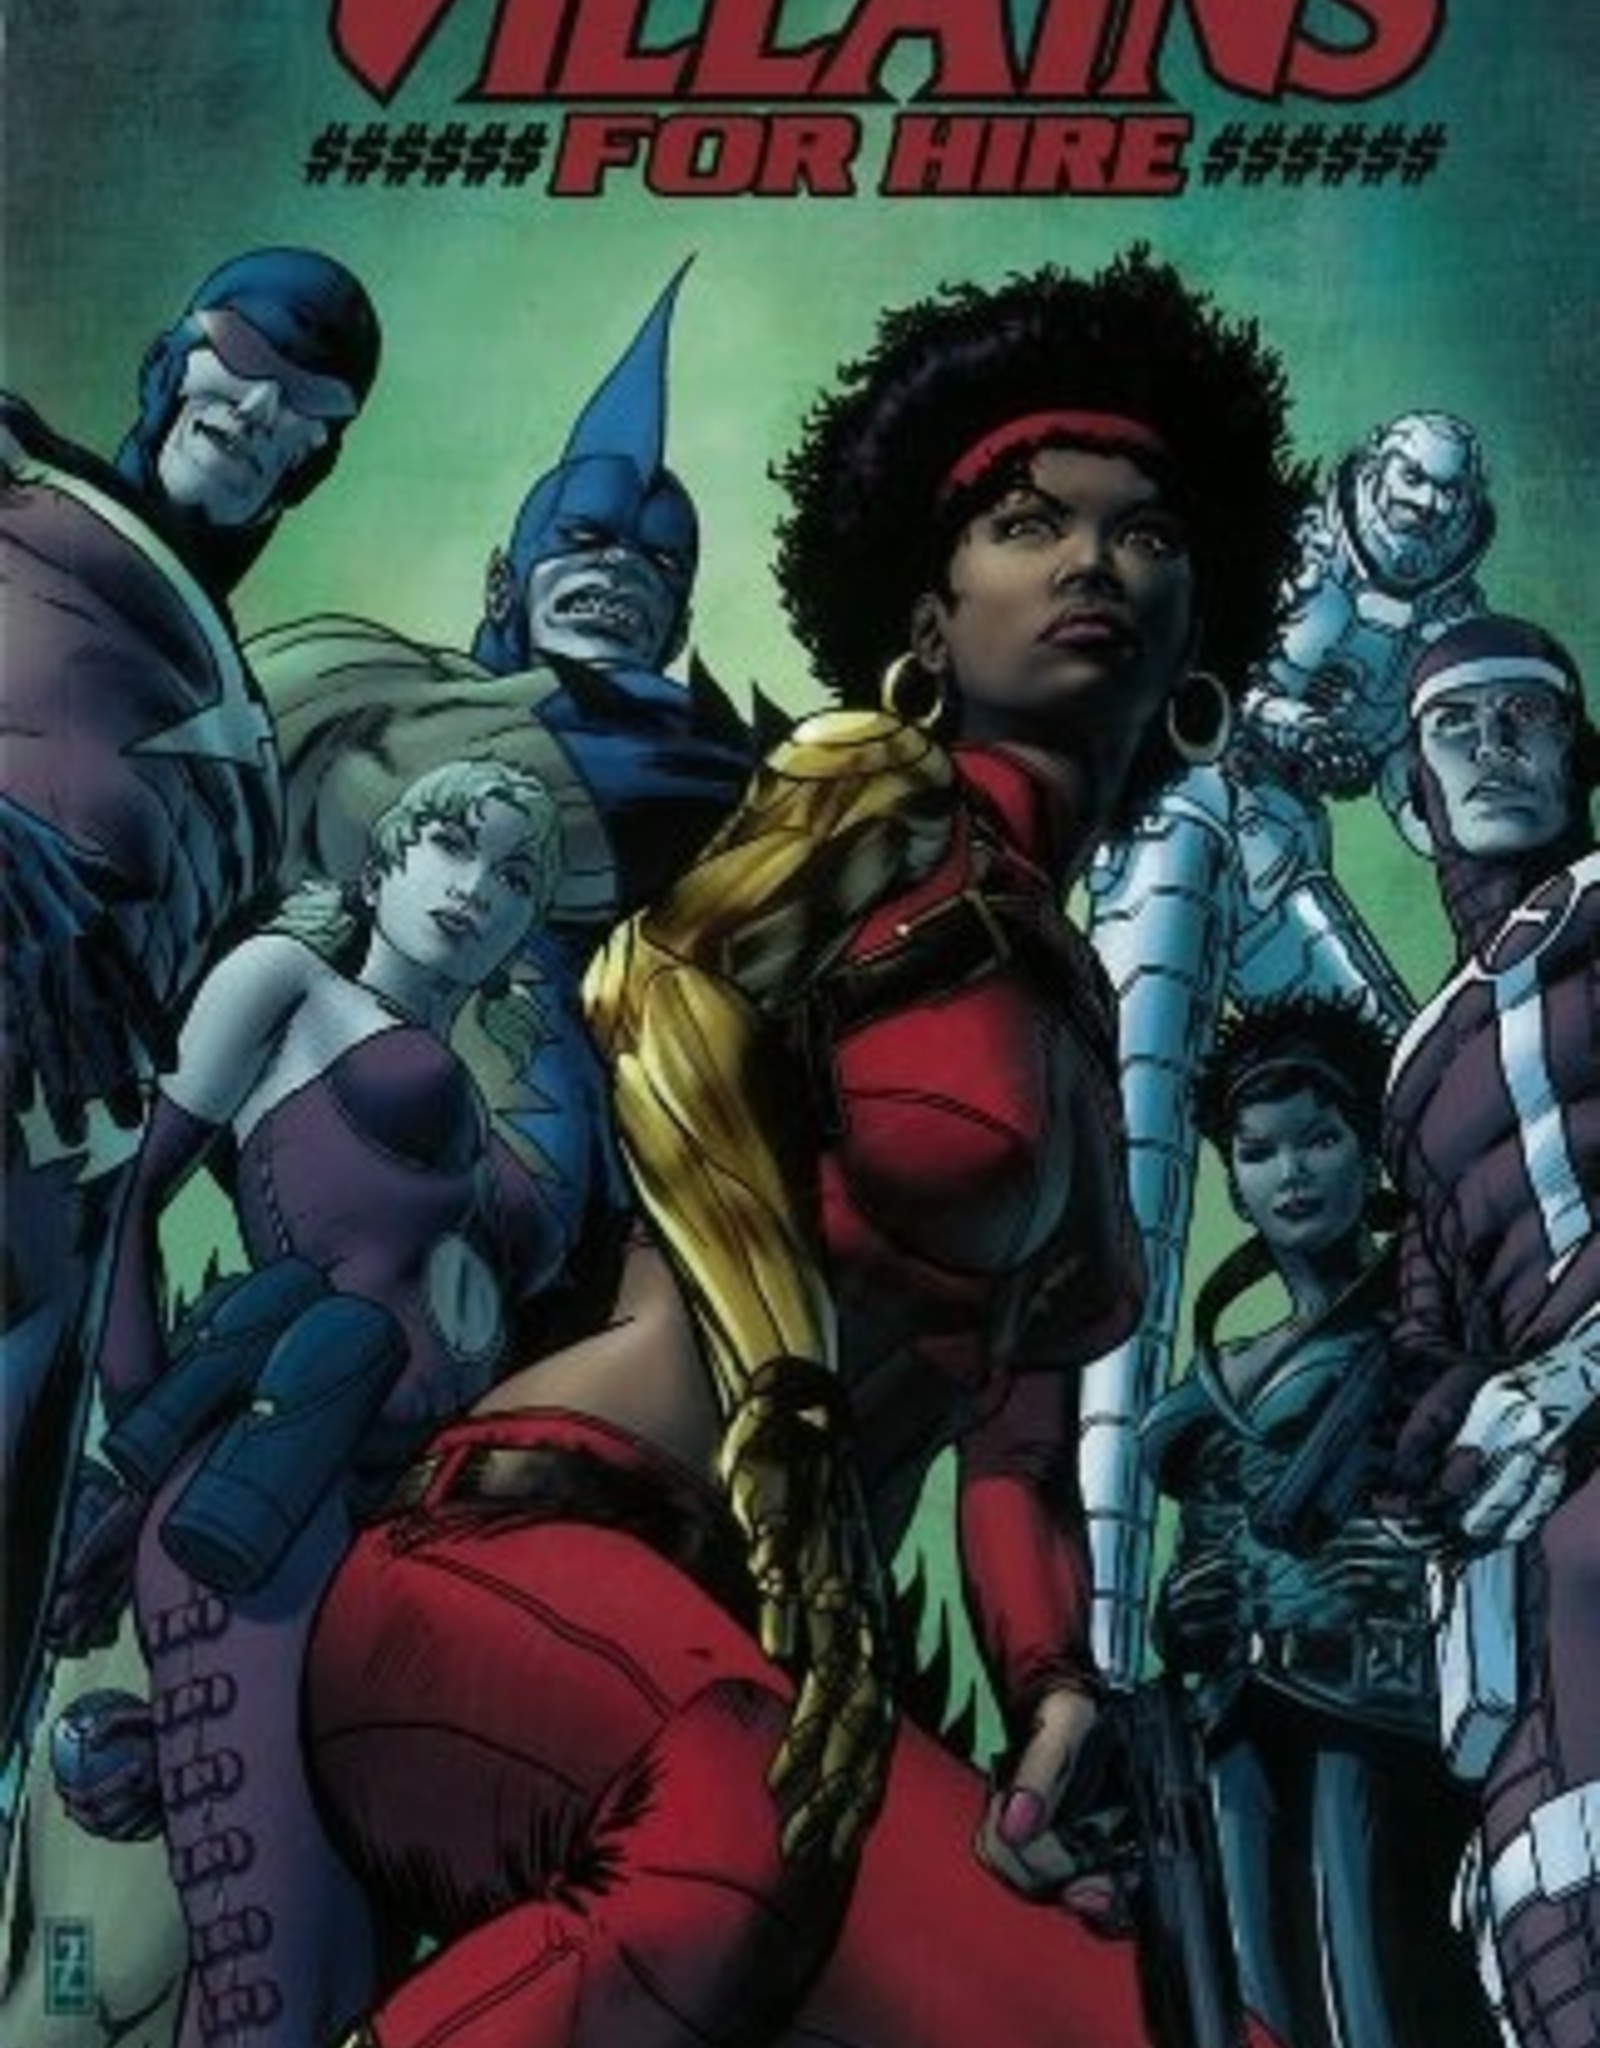 Marvel Comics Villians for Hire: Knight takes King